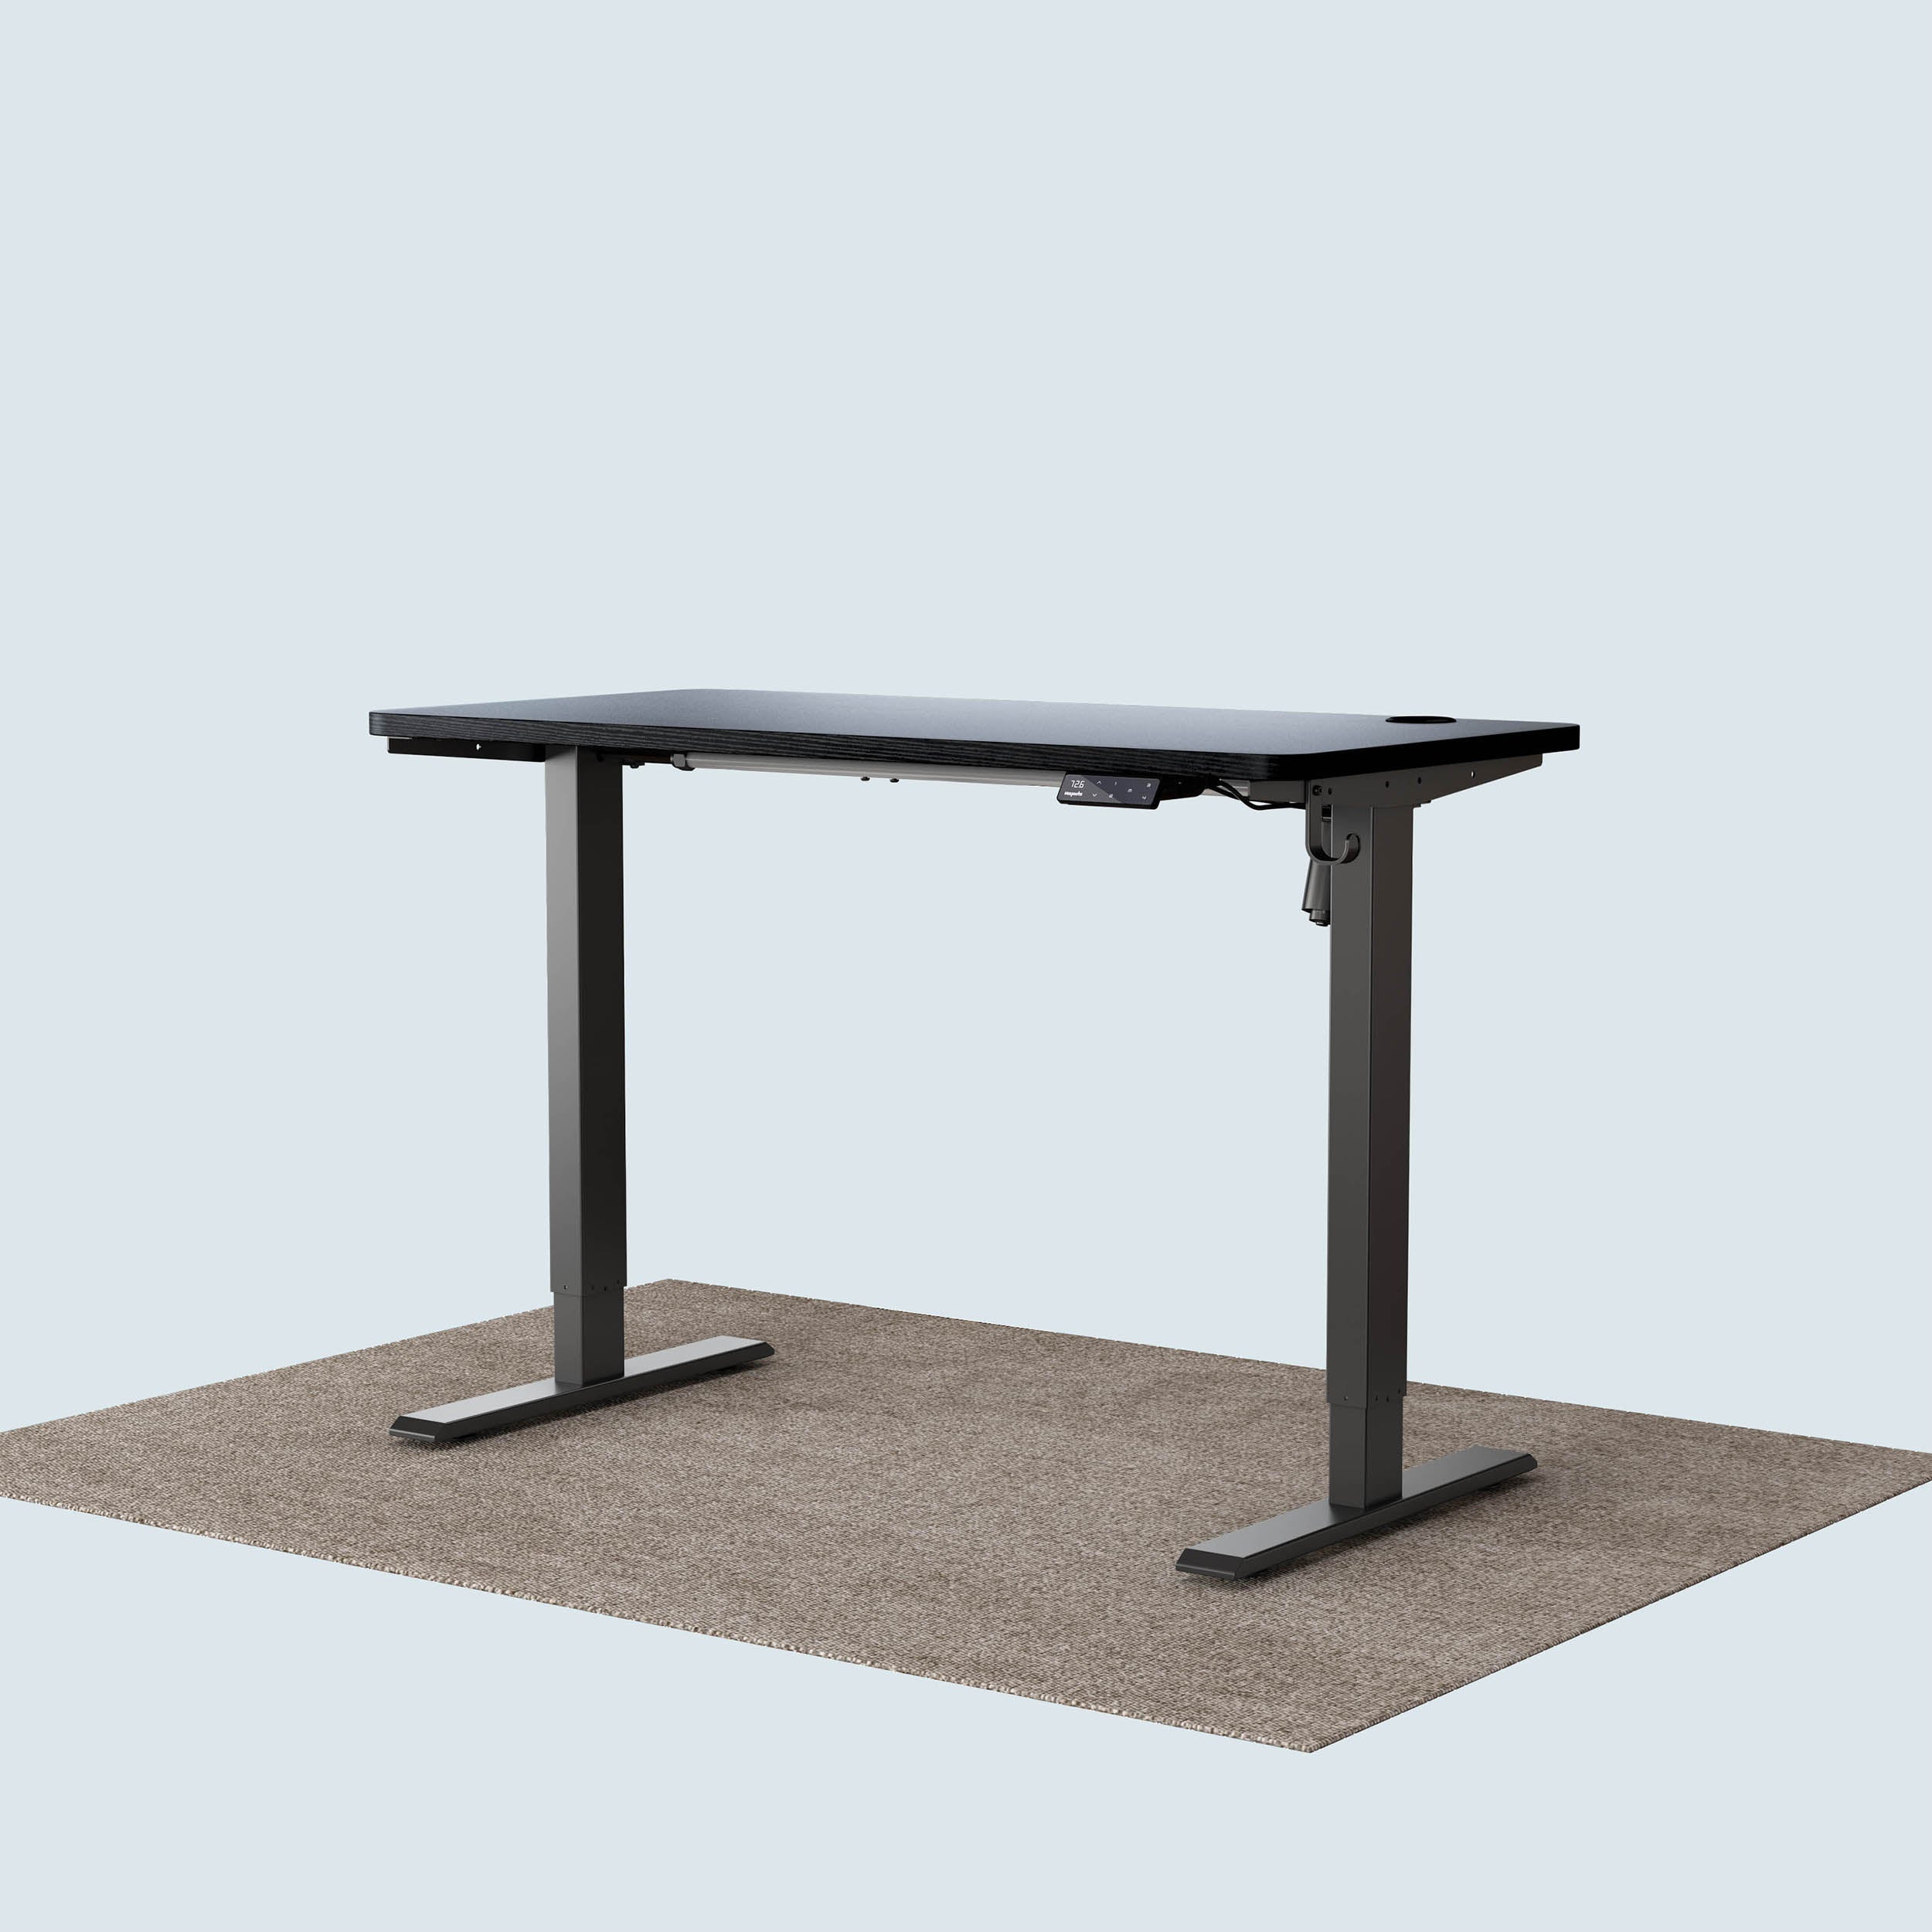 Maidesite T1 Basic height adjustable desk black frame with 120x60cm desktop